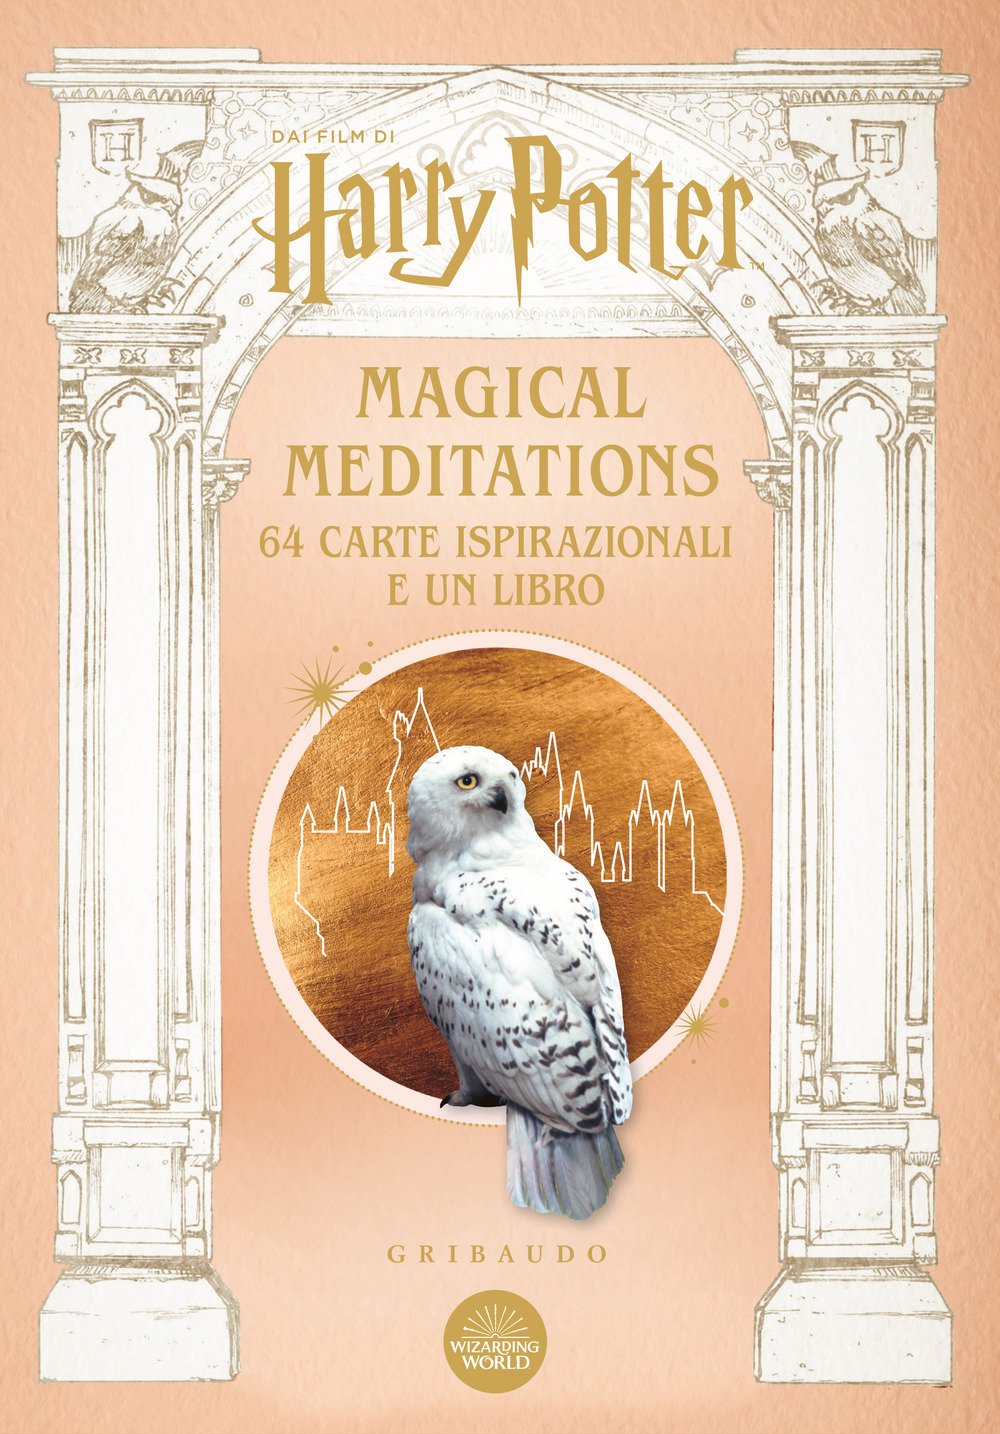 HARRY POTTER MAGICAL MEDITATIONS - Gribaudo